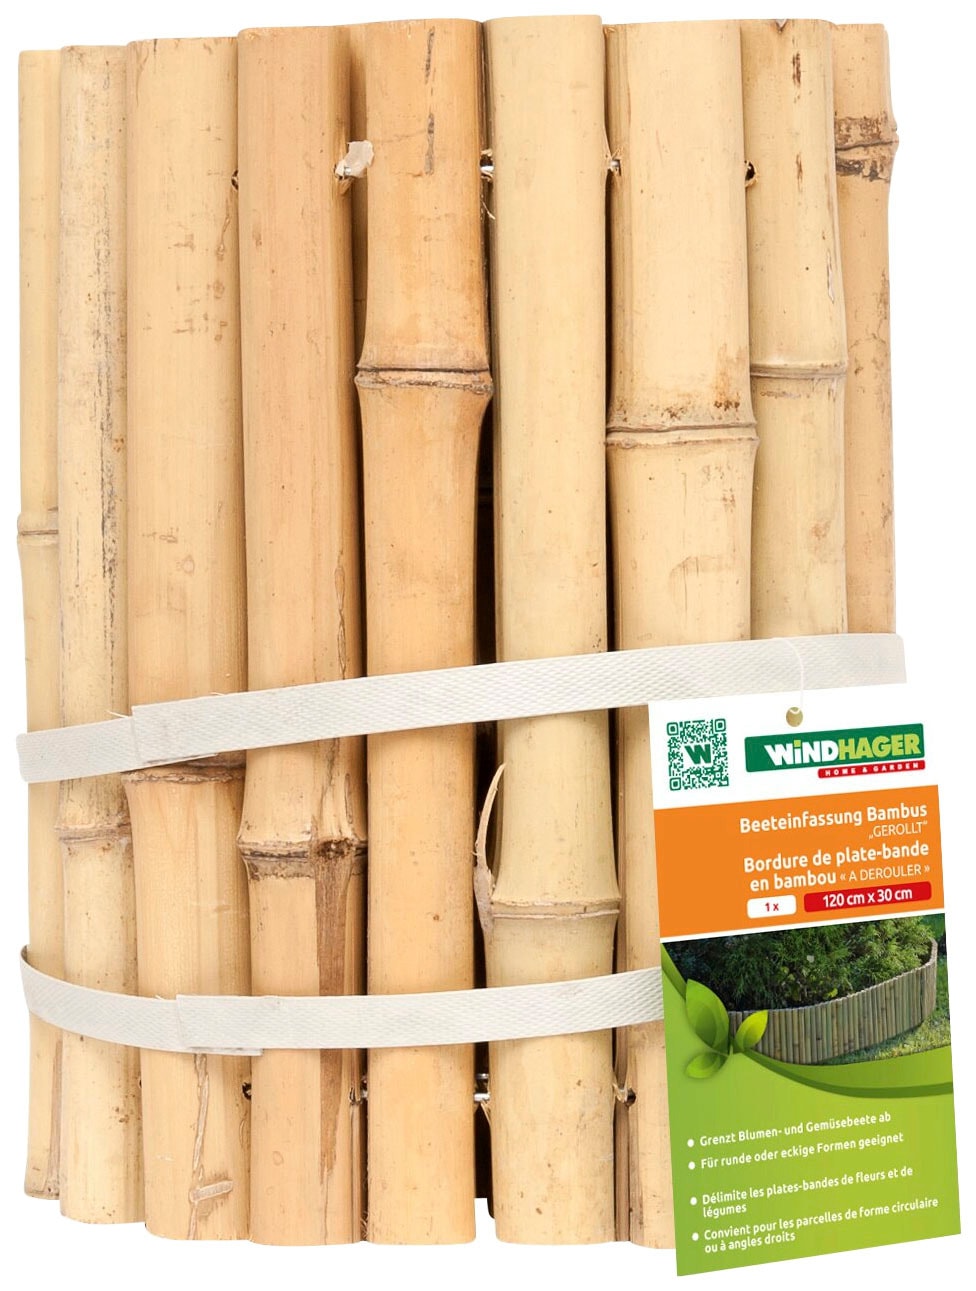 Windhager Beetumrandung »Bambus«, Beeteinfassung